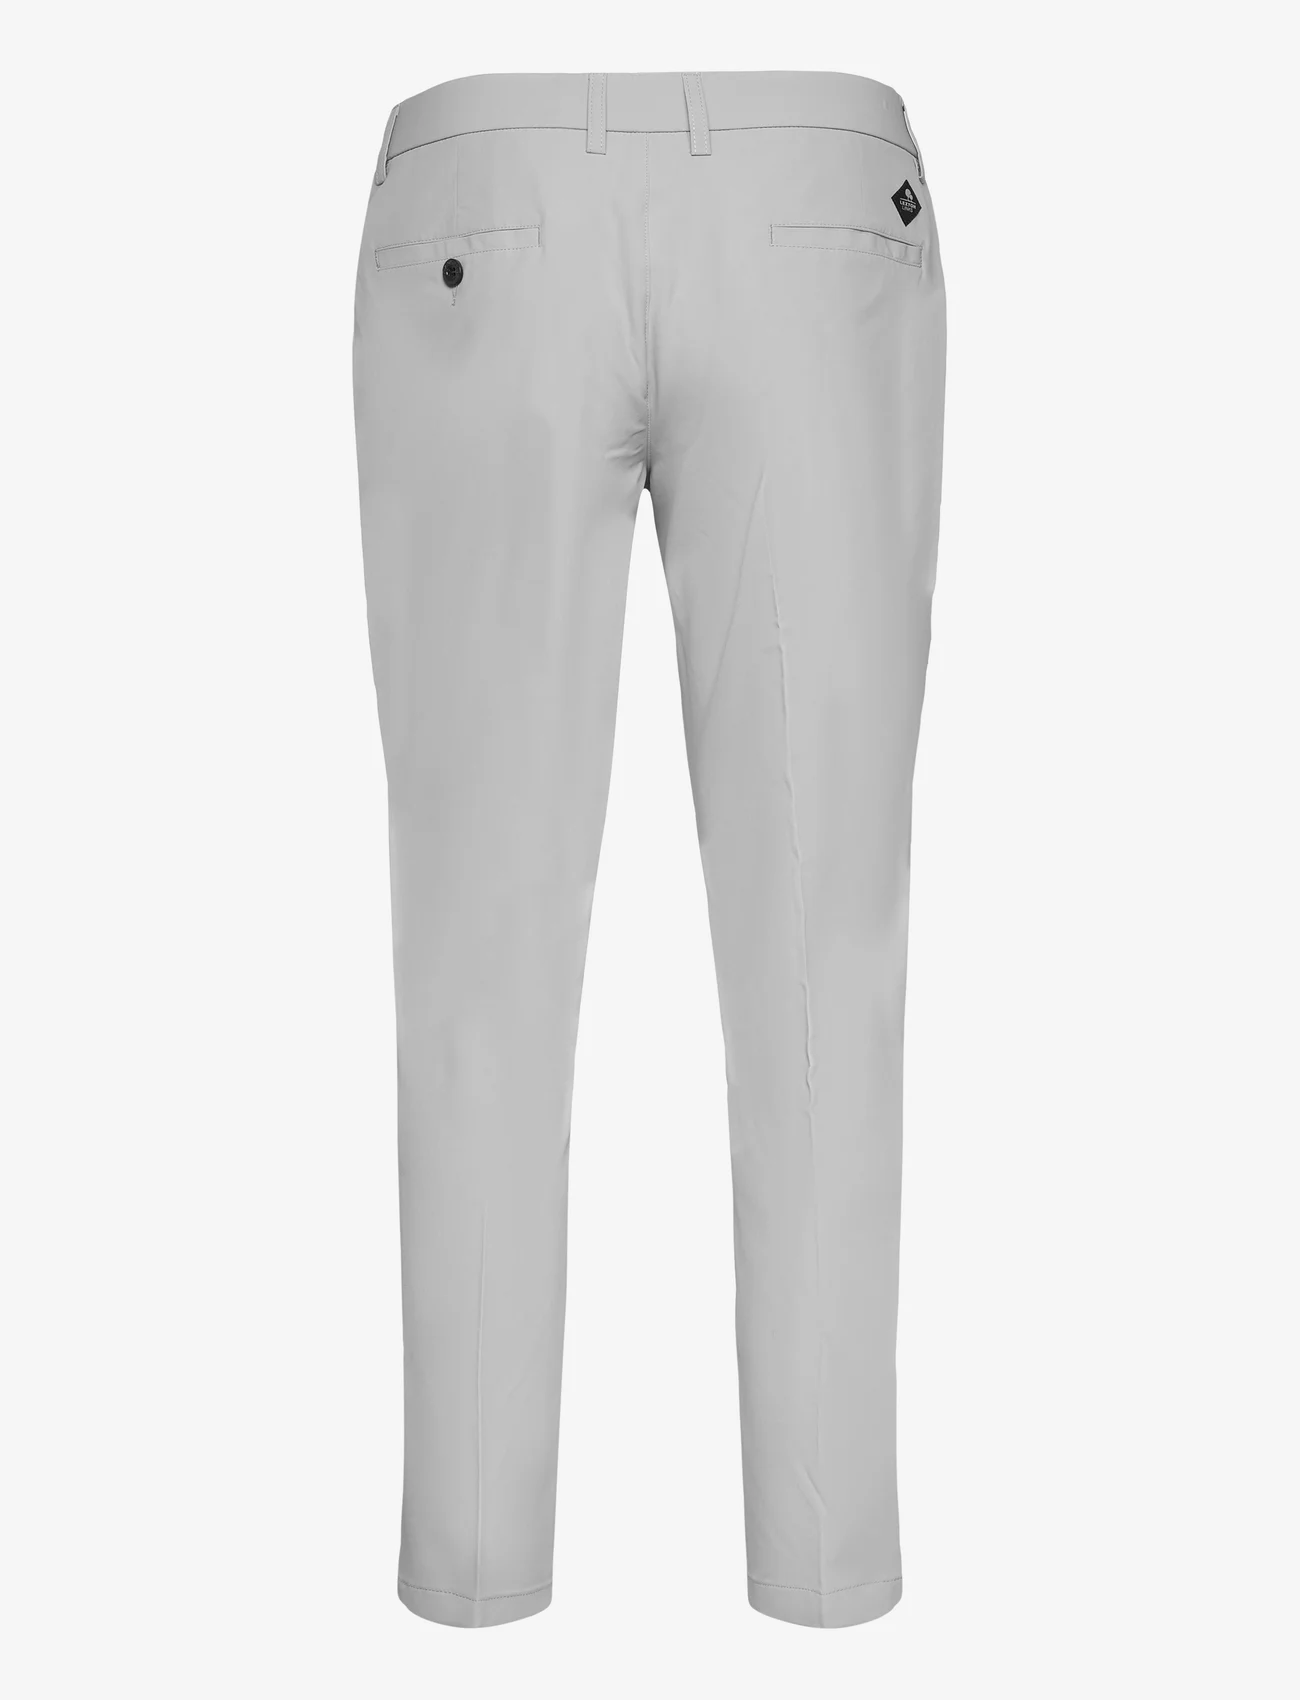 Lexton Links - Logan Golf Pants - sporthosen - light grey - 1